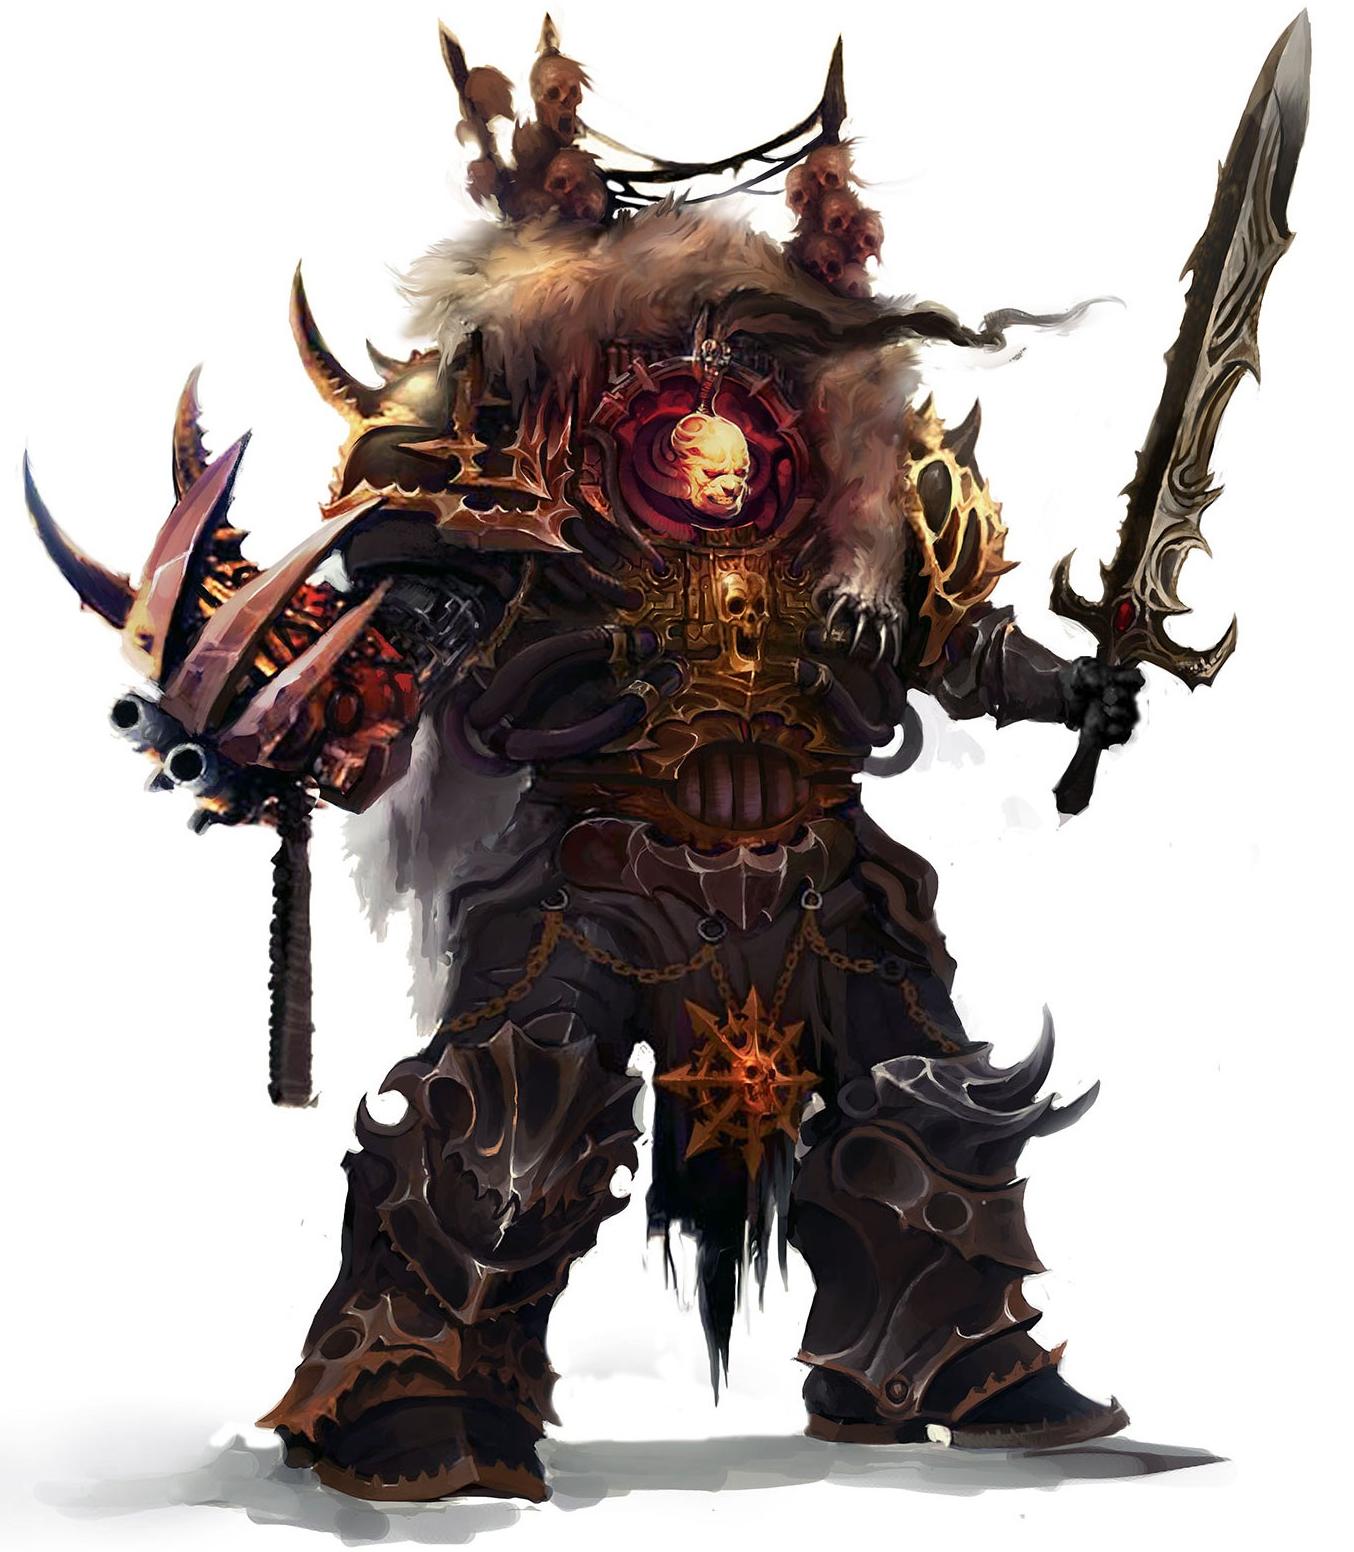 Abaddon the Despoiler: The Arch-nemesis of Warhammer 40k 2